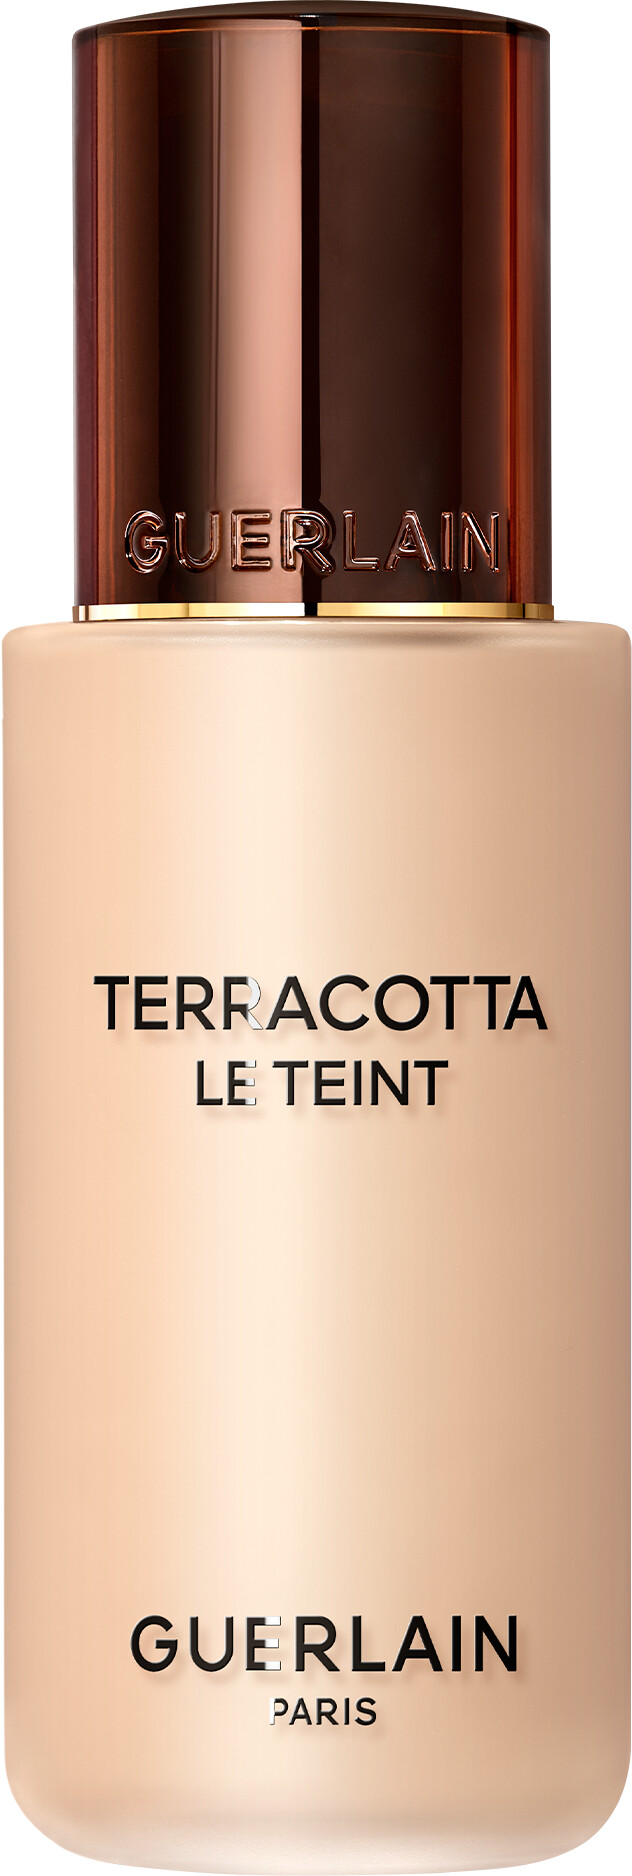 GUERLAIN Terracotta Le Teint Healthy Glow Foundation 35ml 1N - Neutral